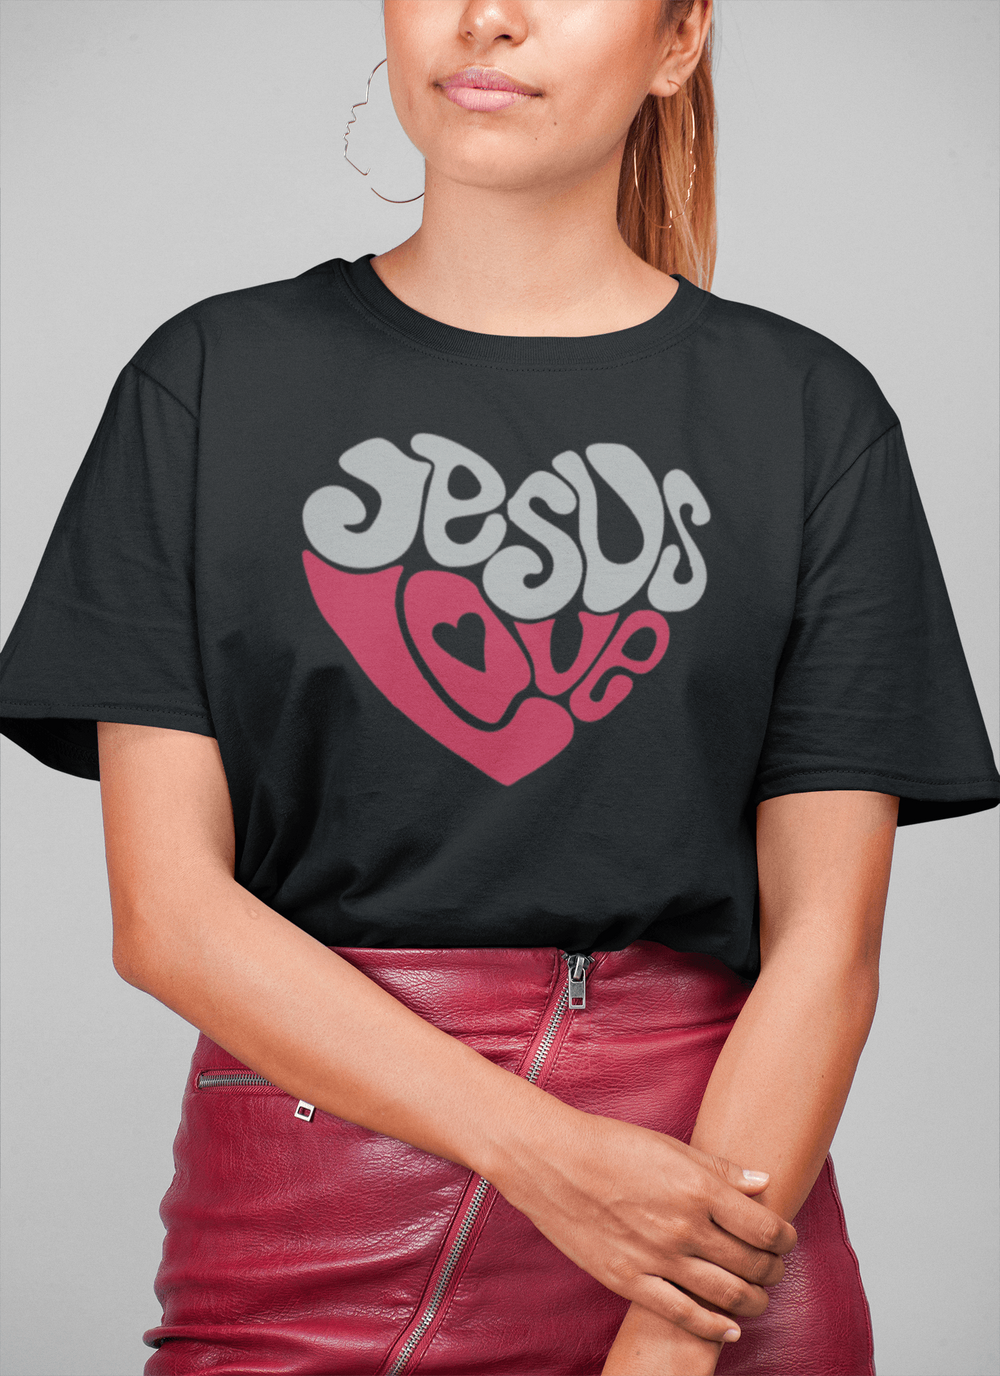 Designs by MyUtopia Shout Out:Jesus Love Heart Adult Unisex T-Shirt